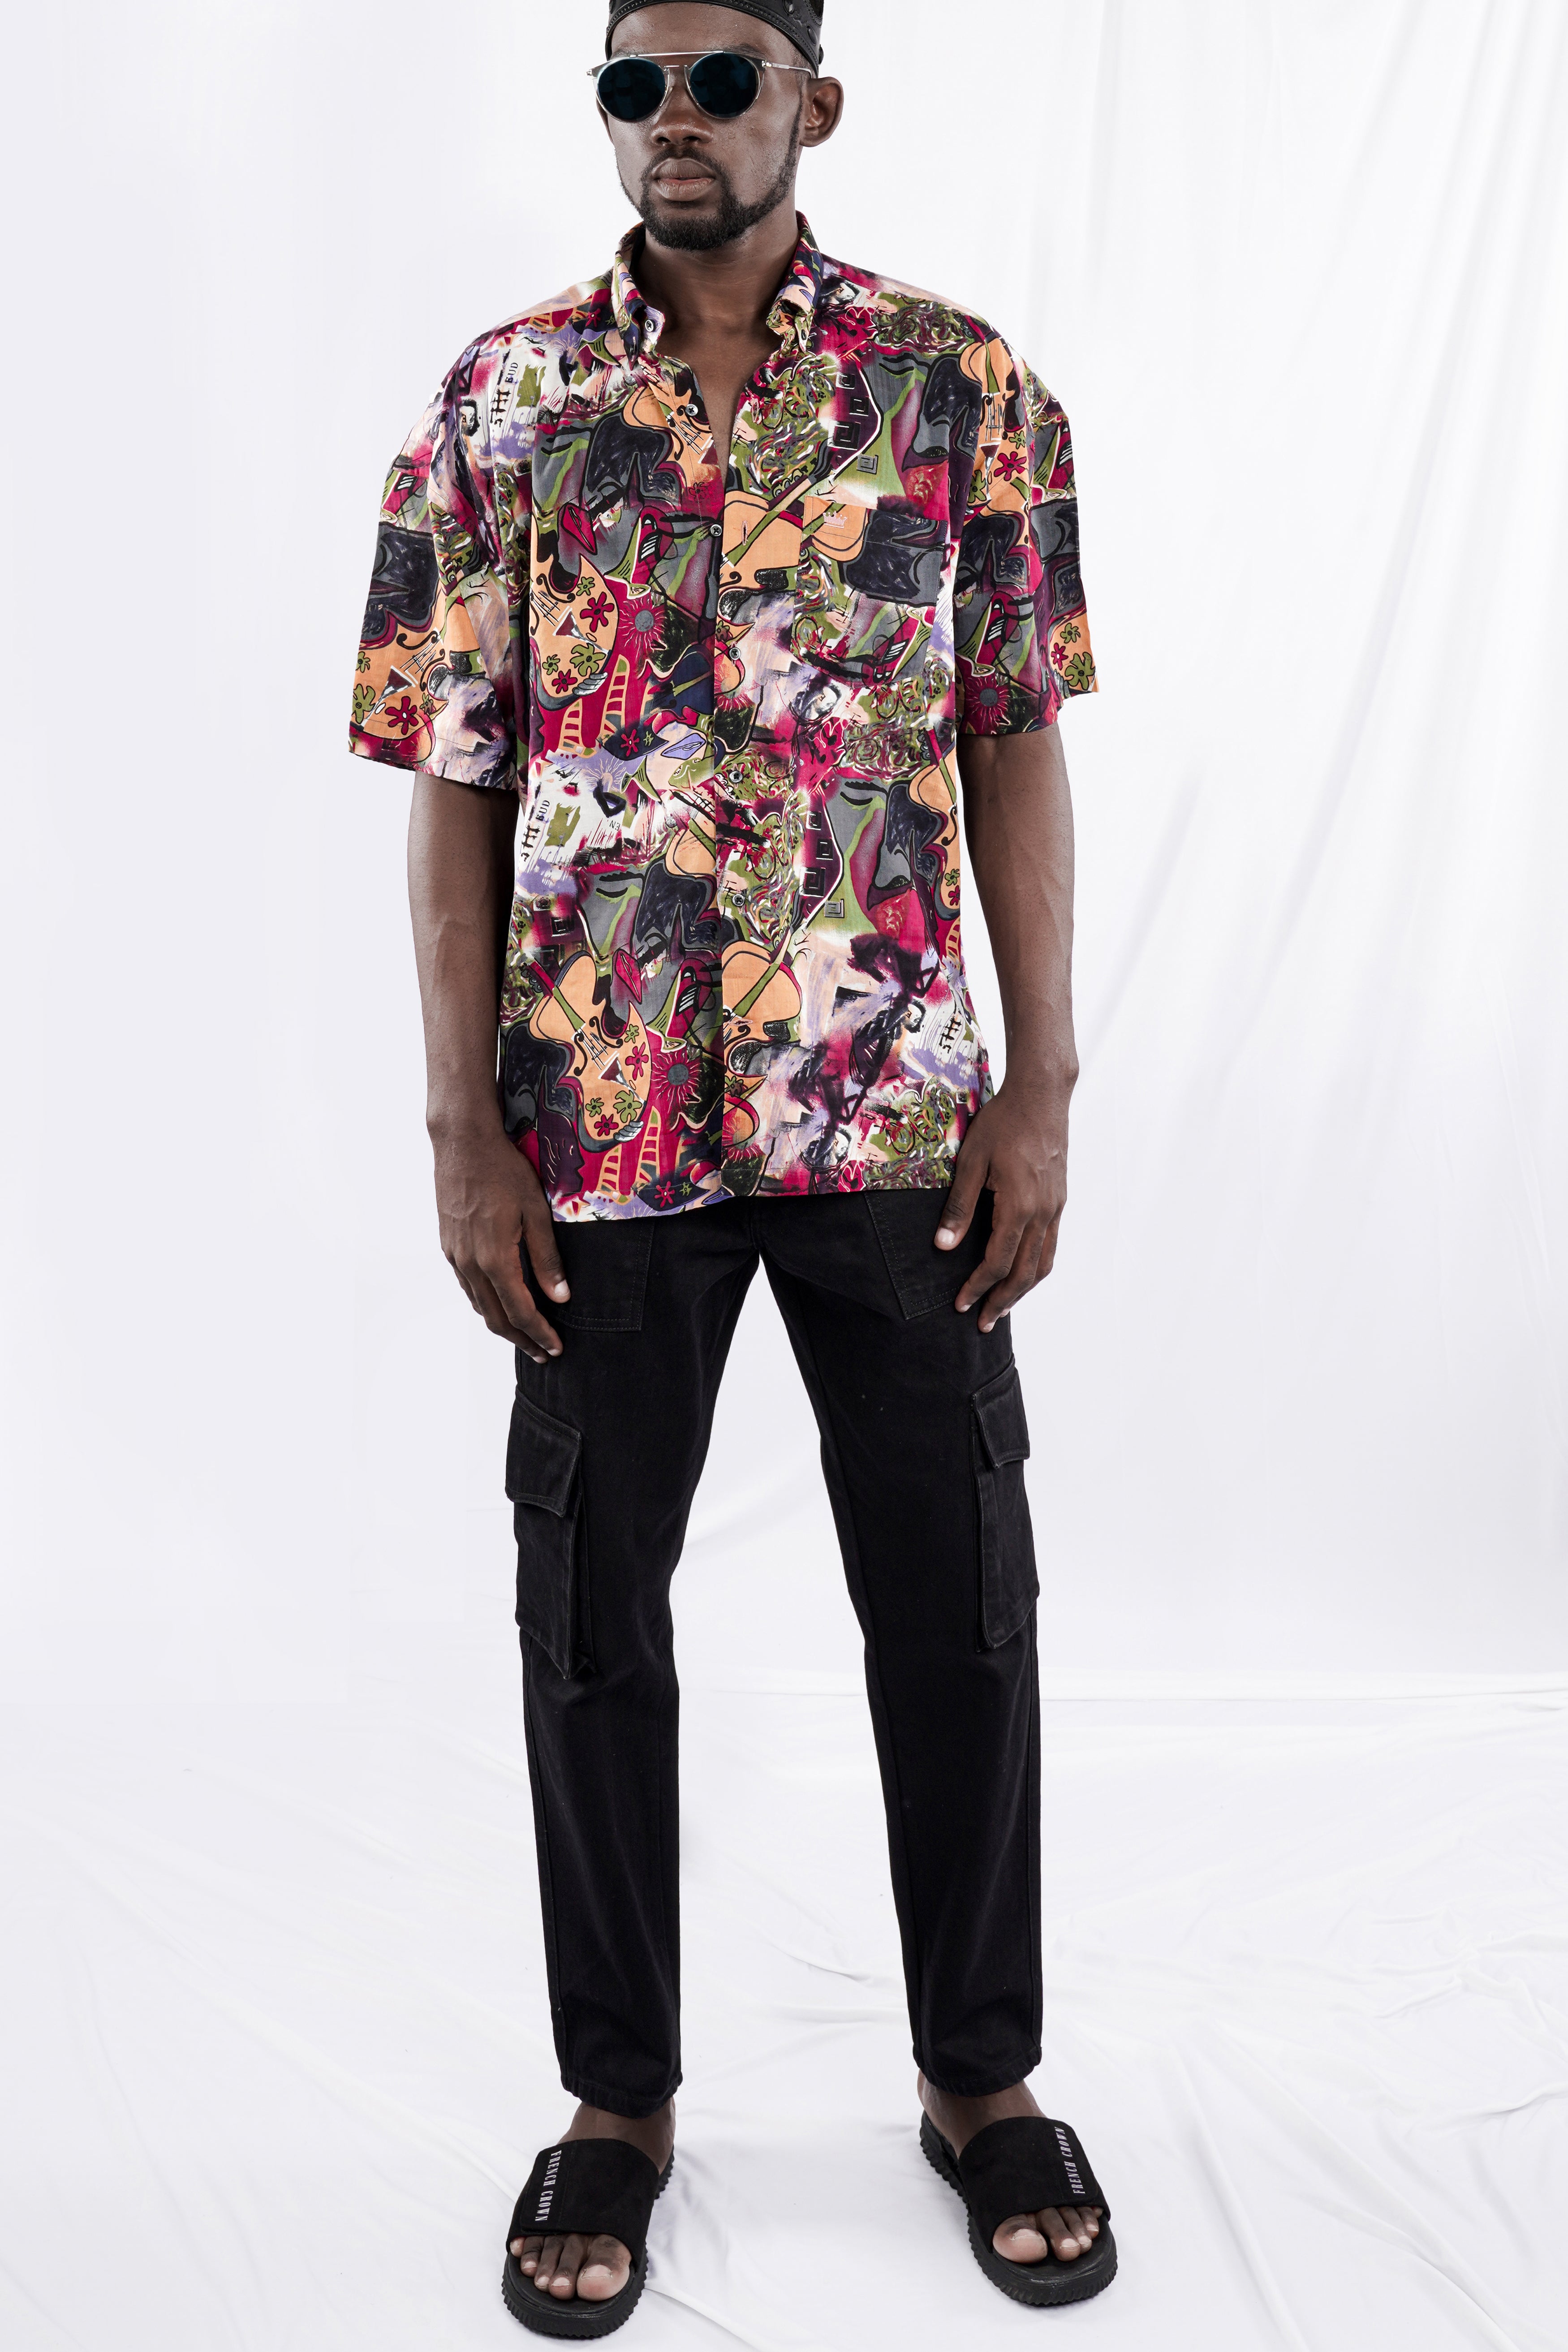 Jade Black with Merry Maroon Funky Printed Lightweight Premium Cotton Oversized Shirt